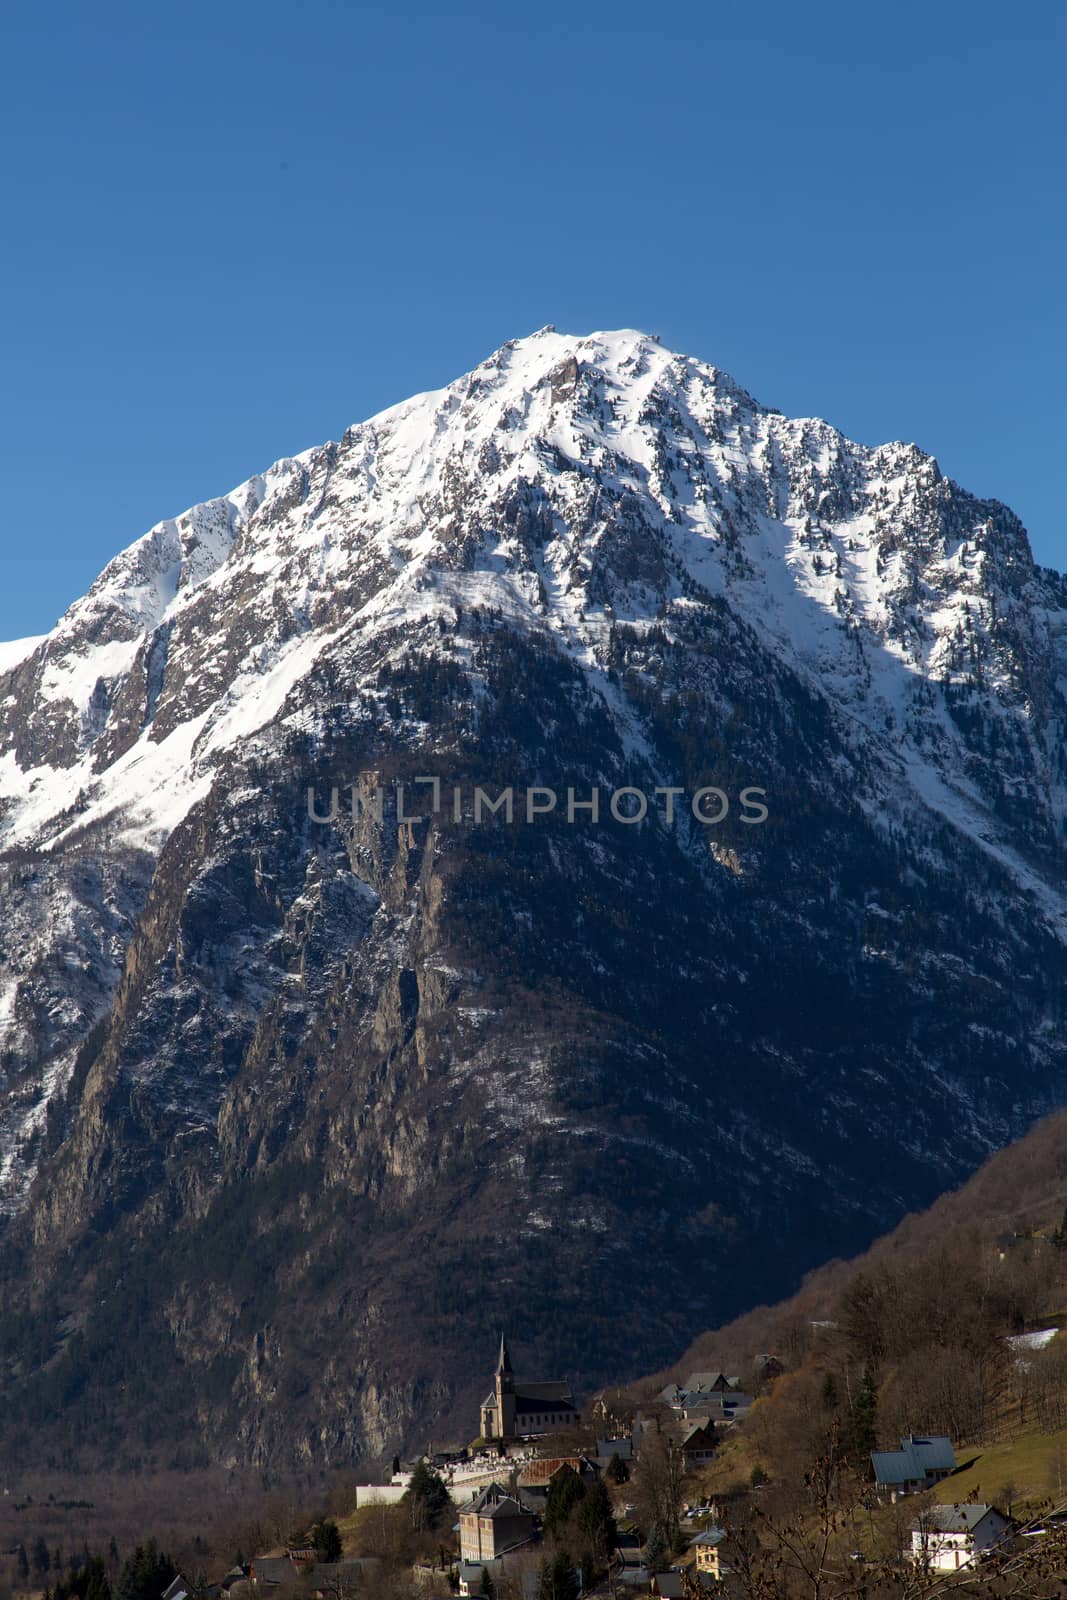 Alps in winter - 16 by Kartouchken